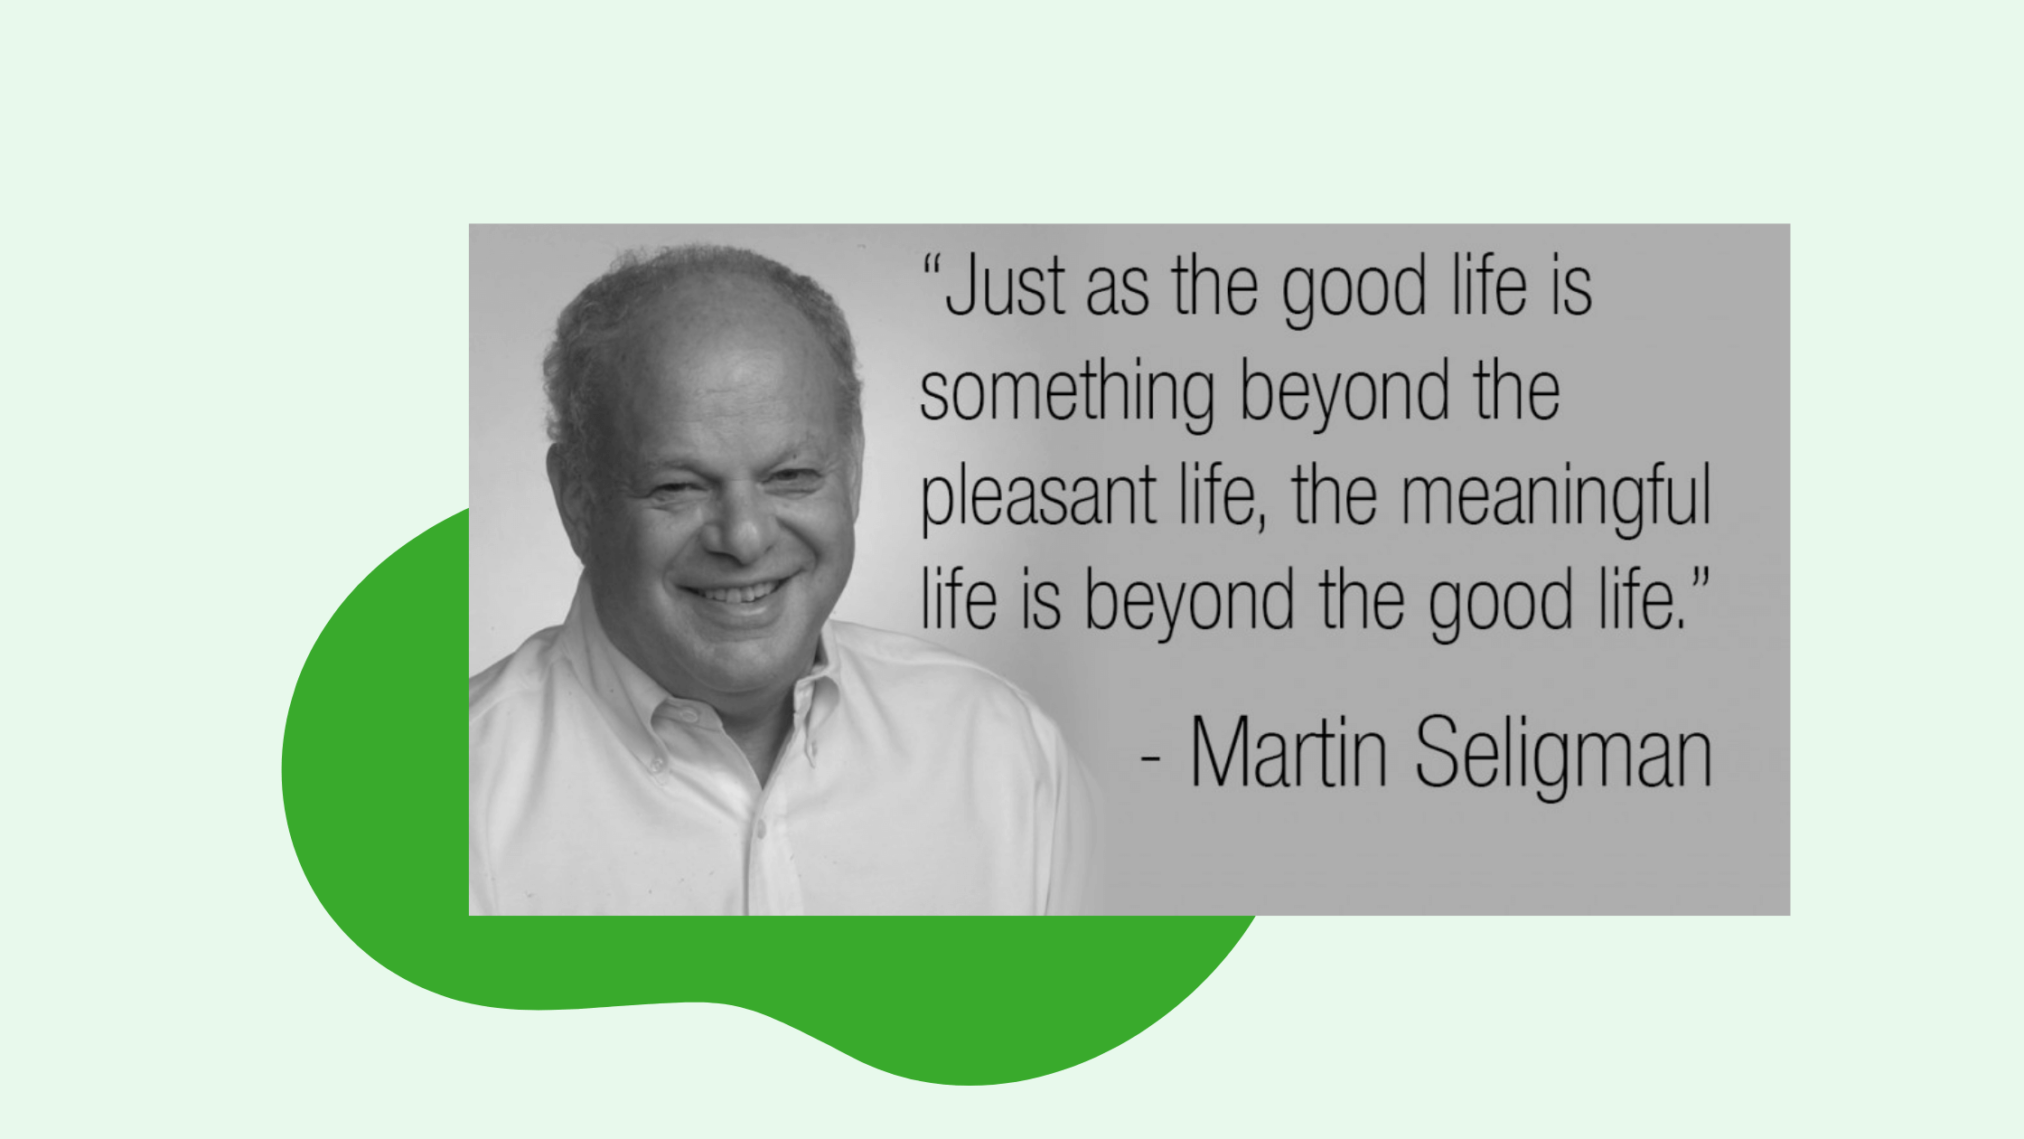  Martin Seligman photo and quote